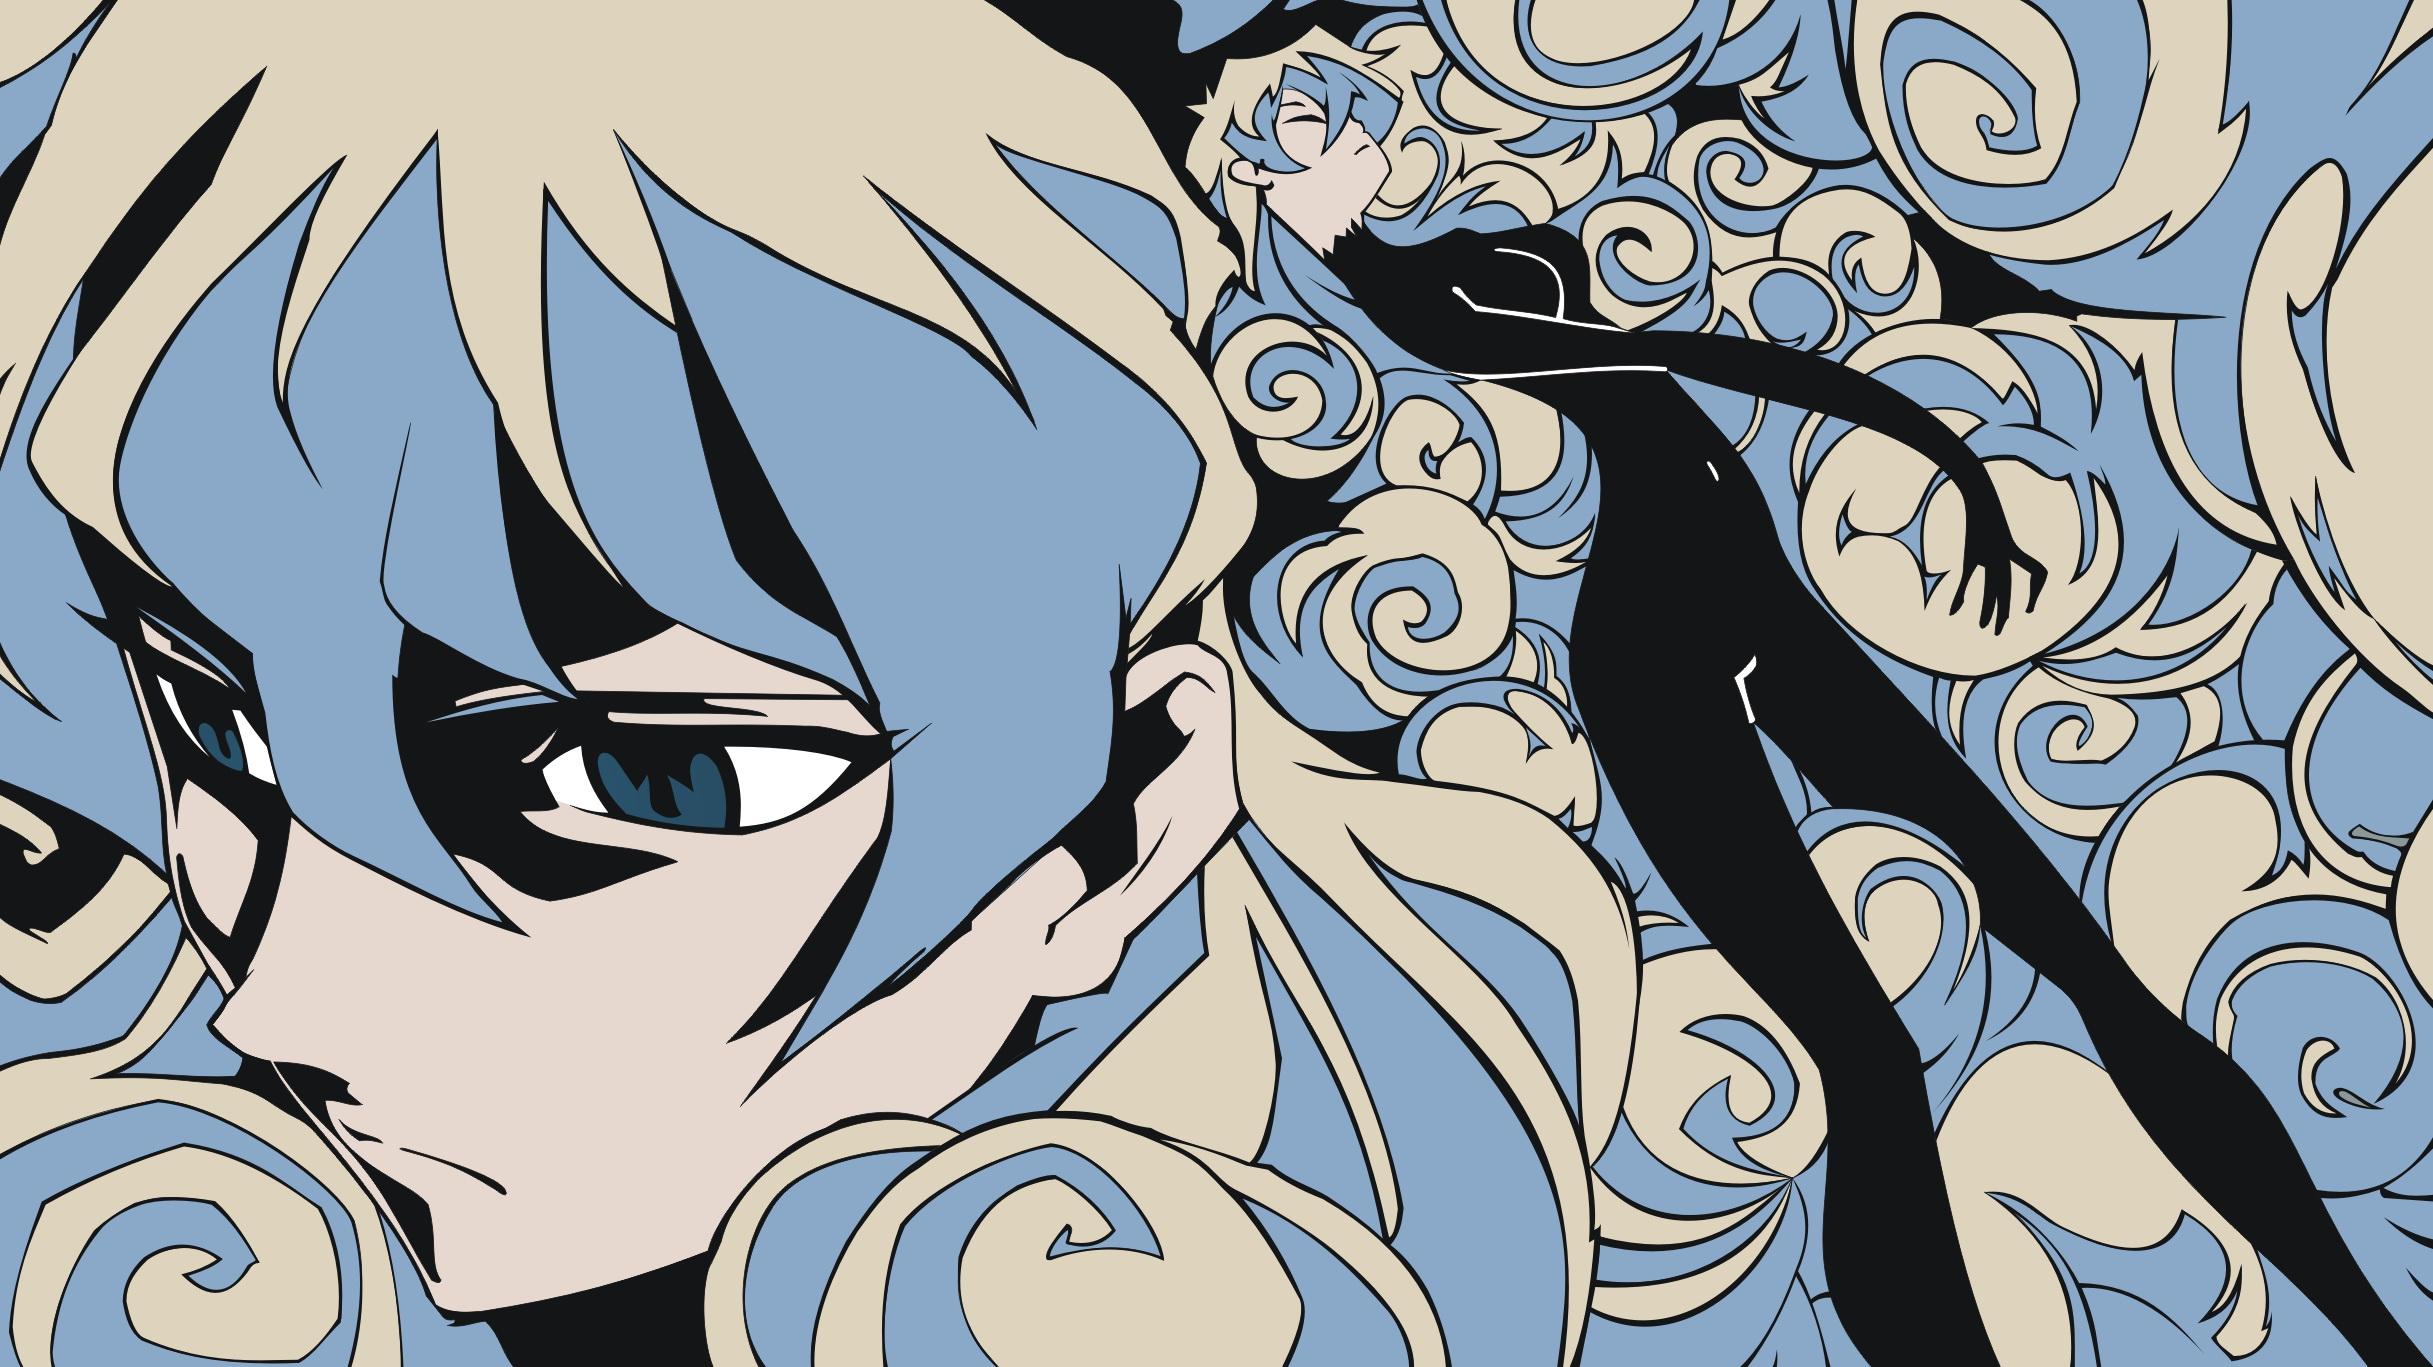 Anti Spiral - Other & Anime Background Wallpapers on Desktop Nexus